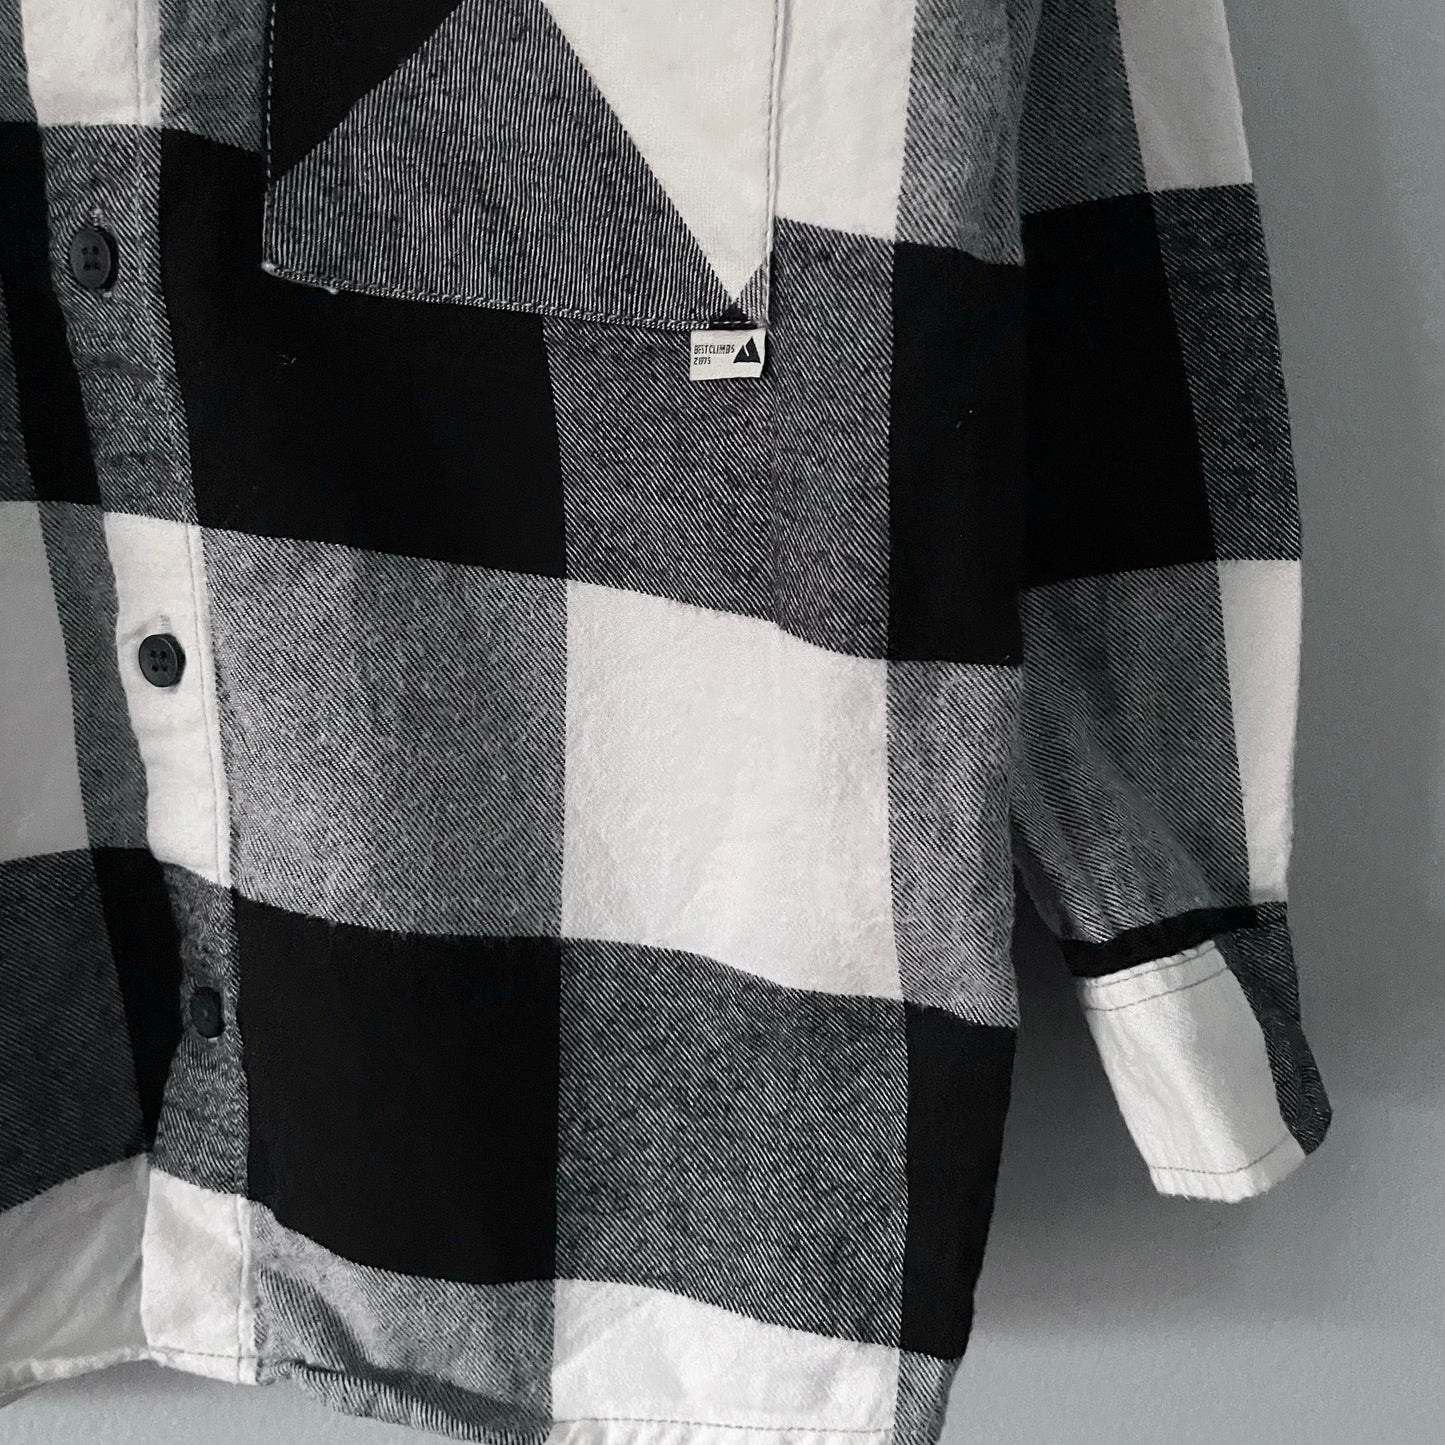 Zara / Black x white flannel shirt / 6Y